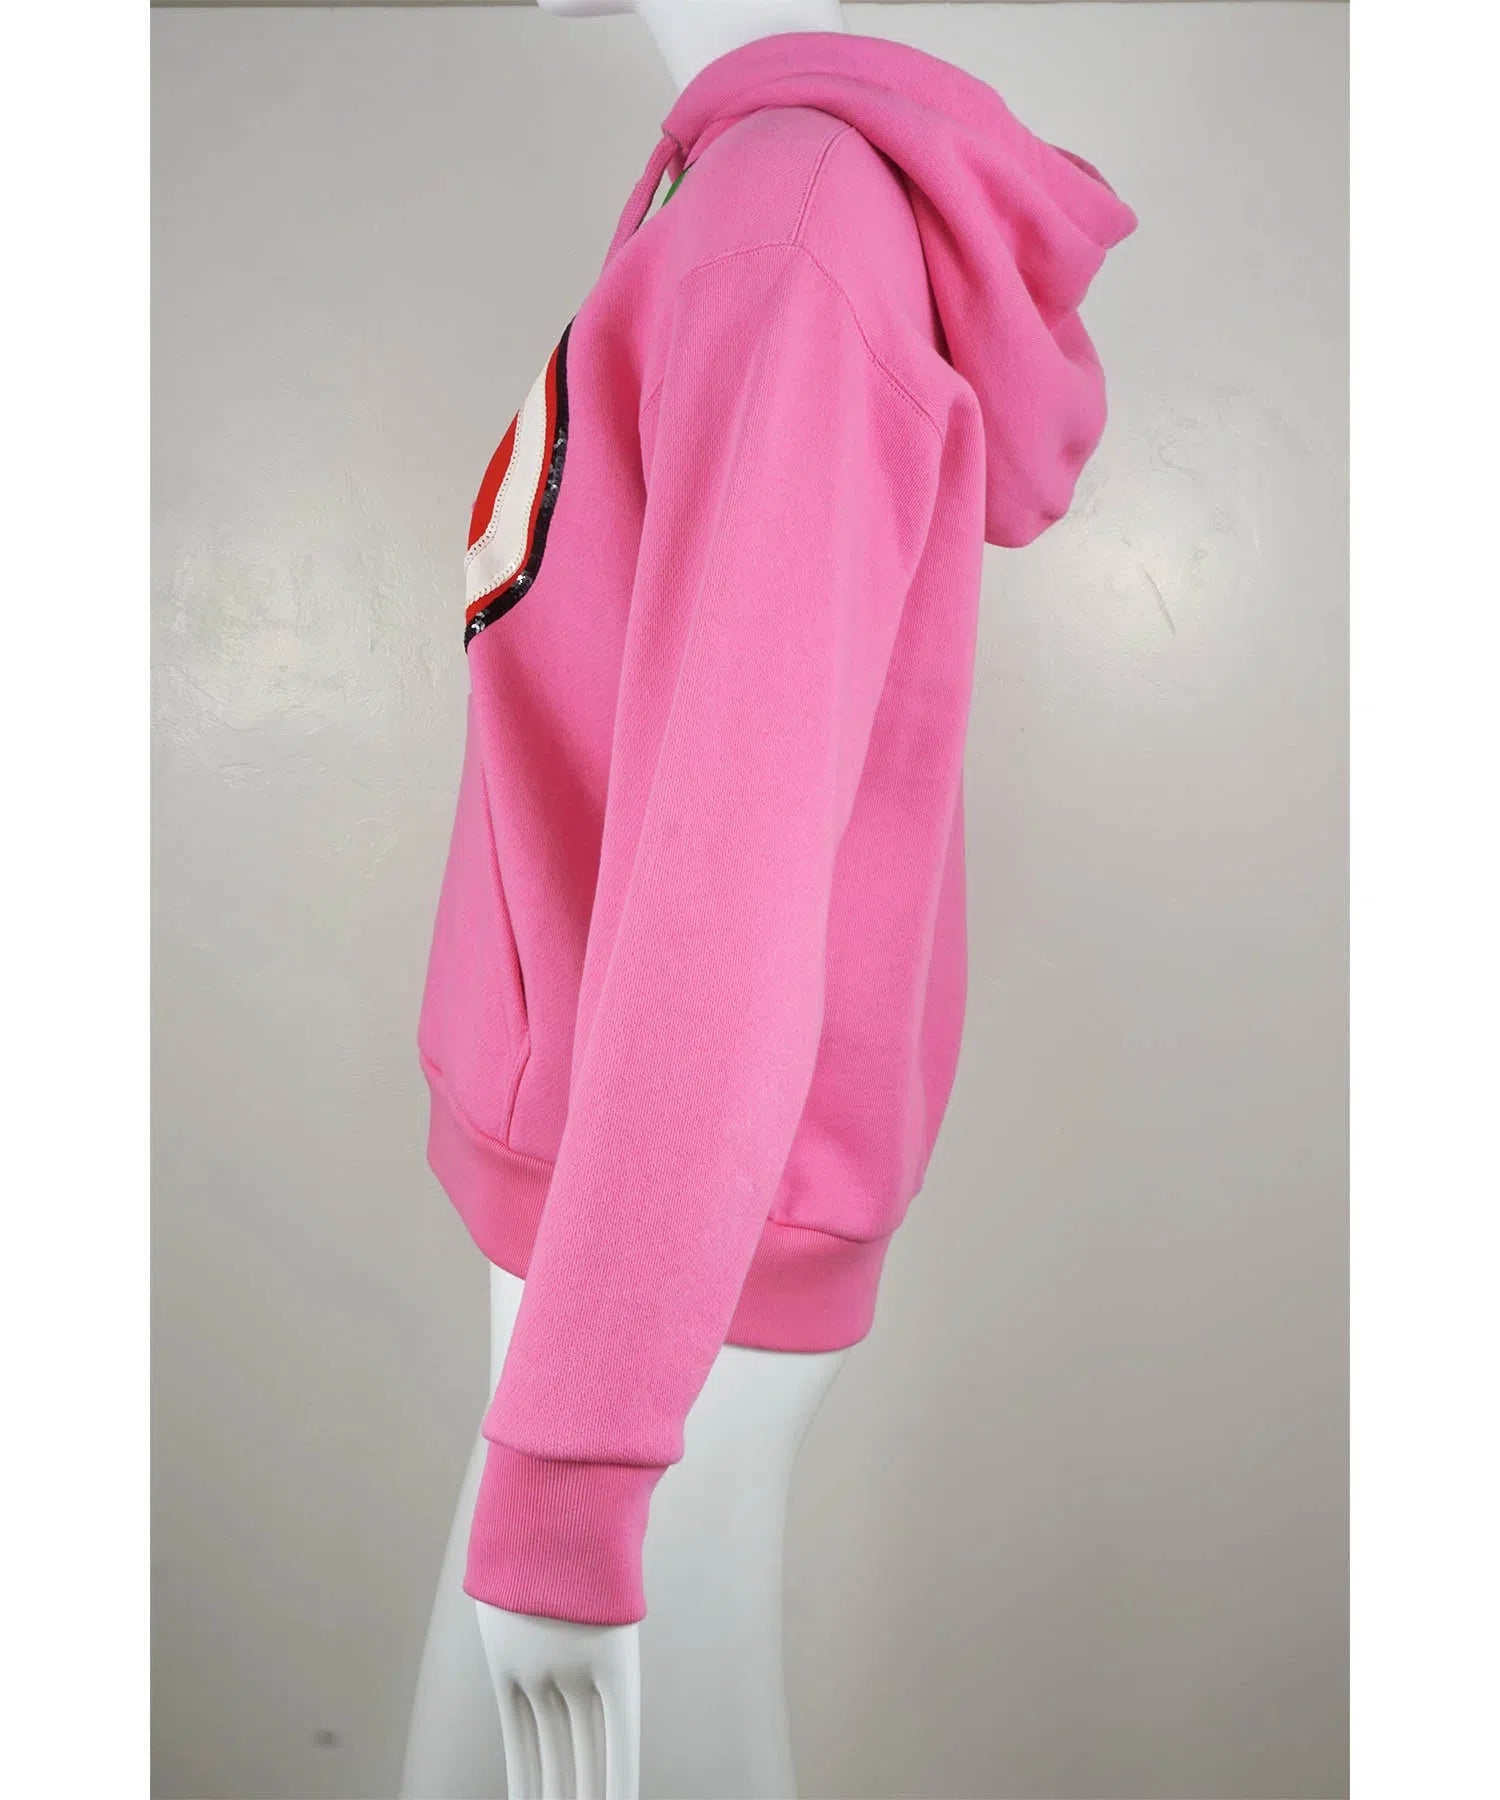 Gucci GG Apple Cotton Hooded Sweatshirt - Foxy Couture Carmel